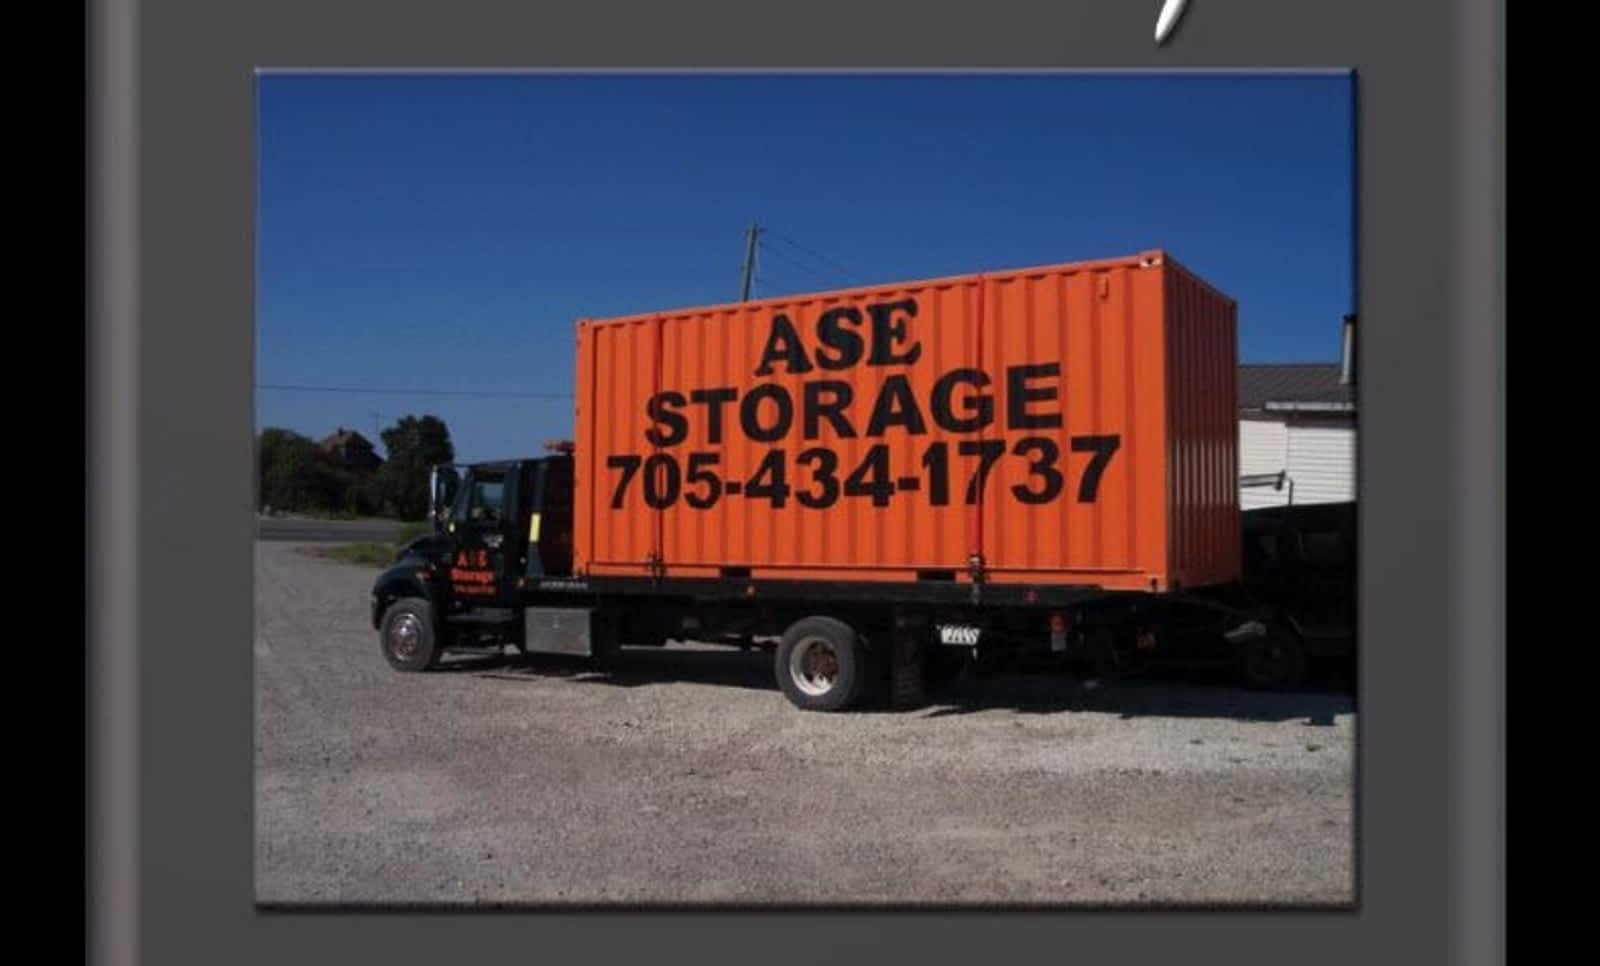 ASE Mobile Storage